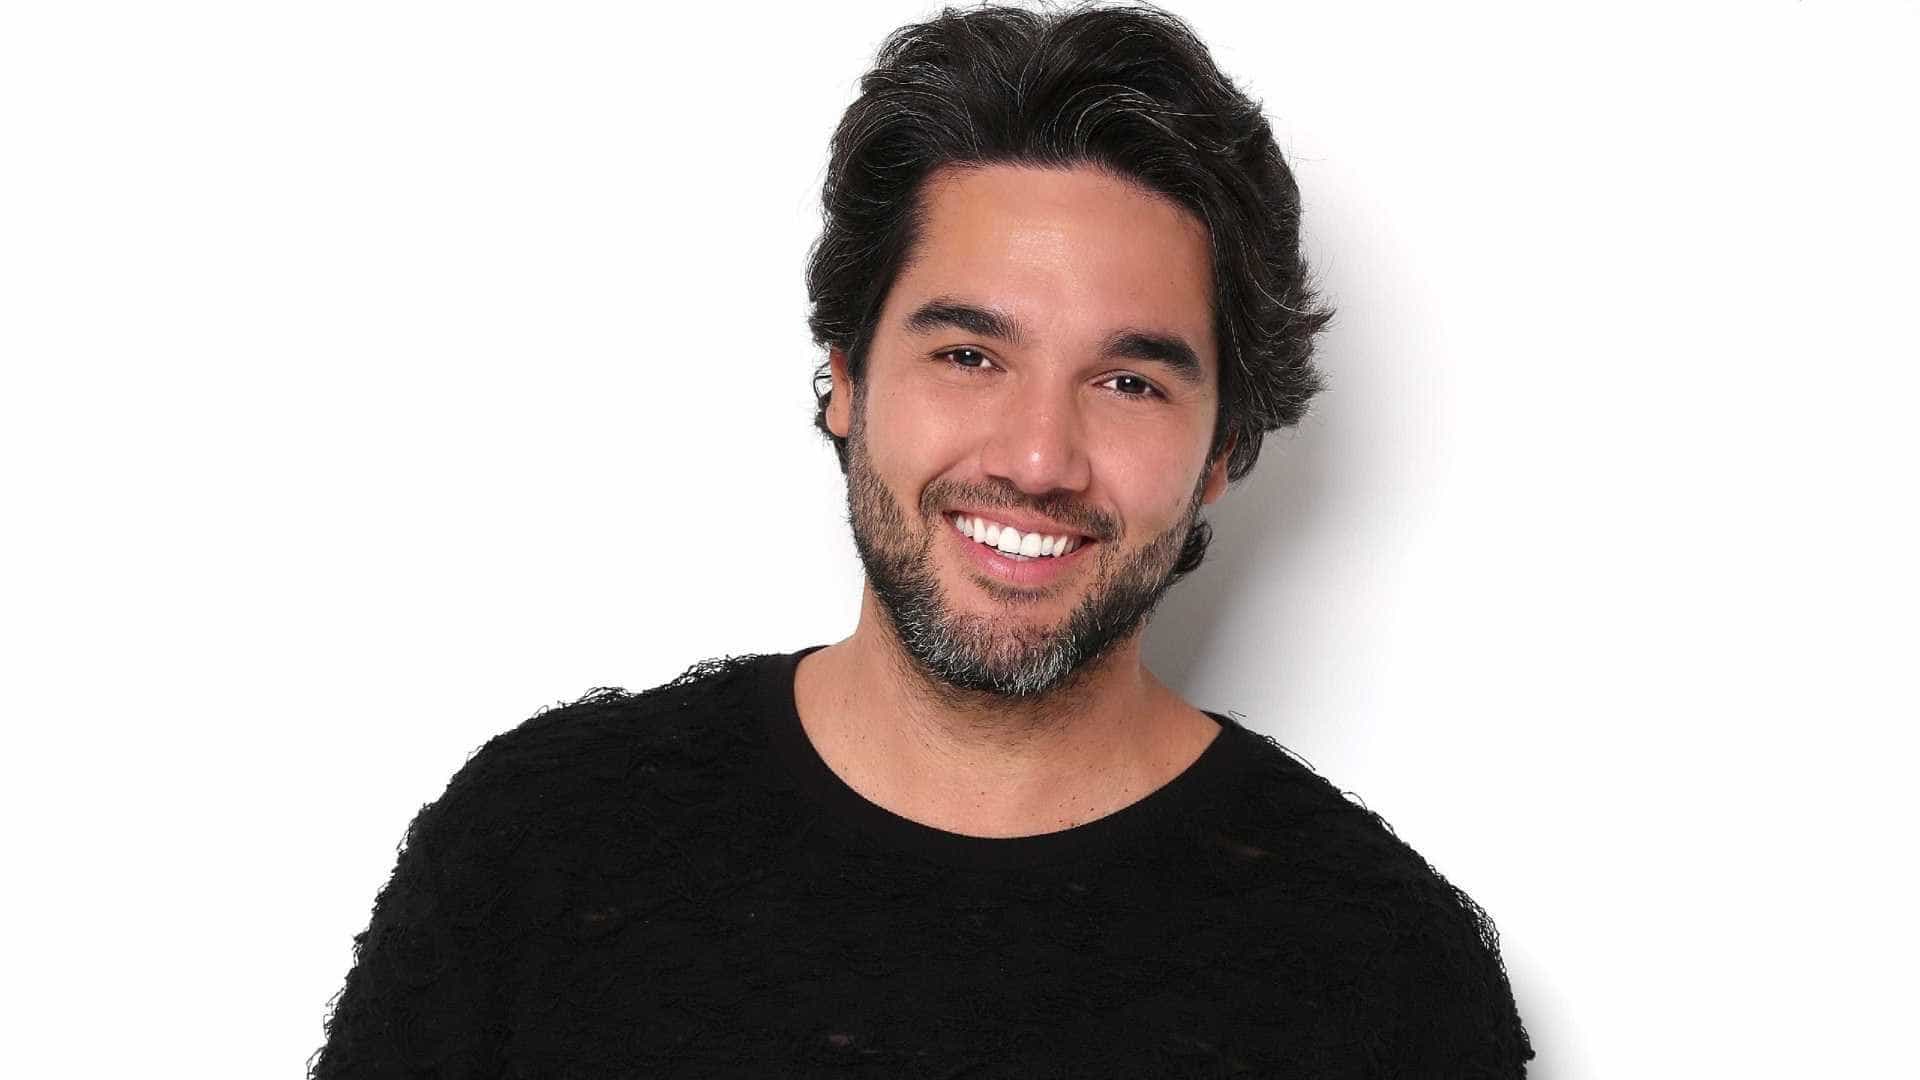 Fernando Sampaio de camiseta preta, sorrindo